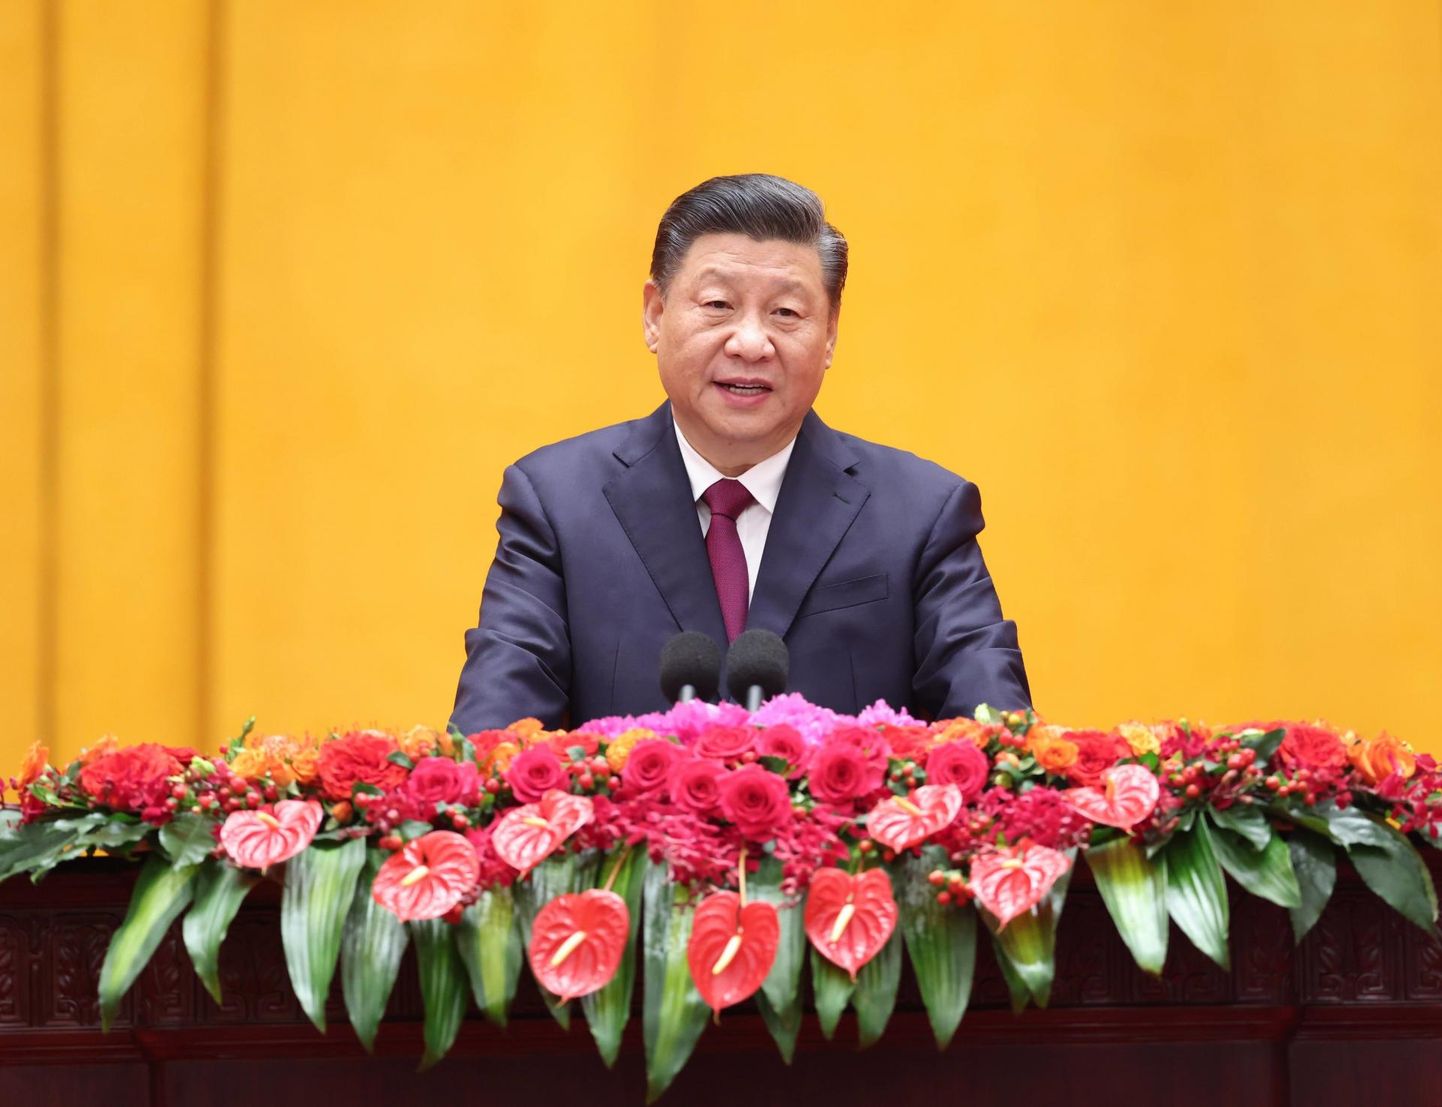 Hiina president Xi Jinping, 10.02.2021